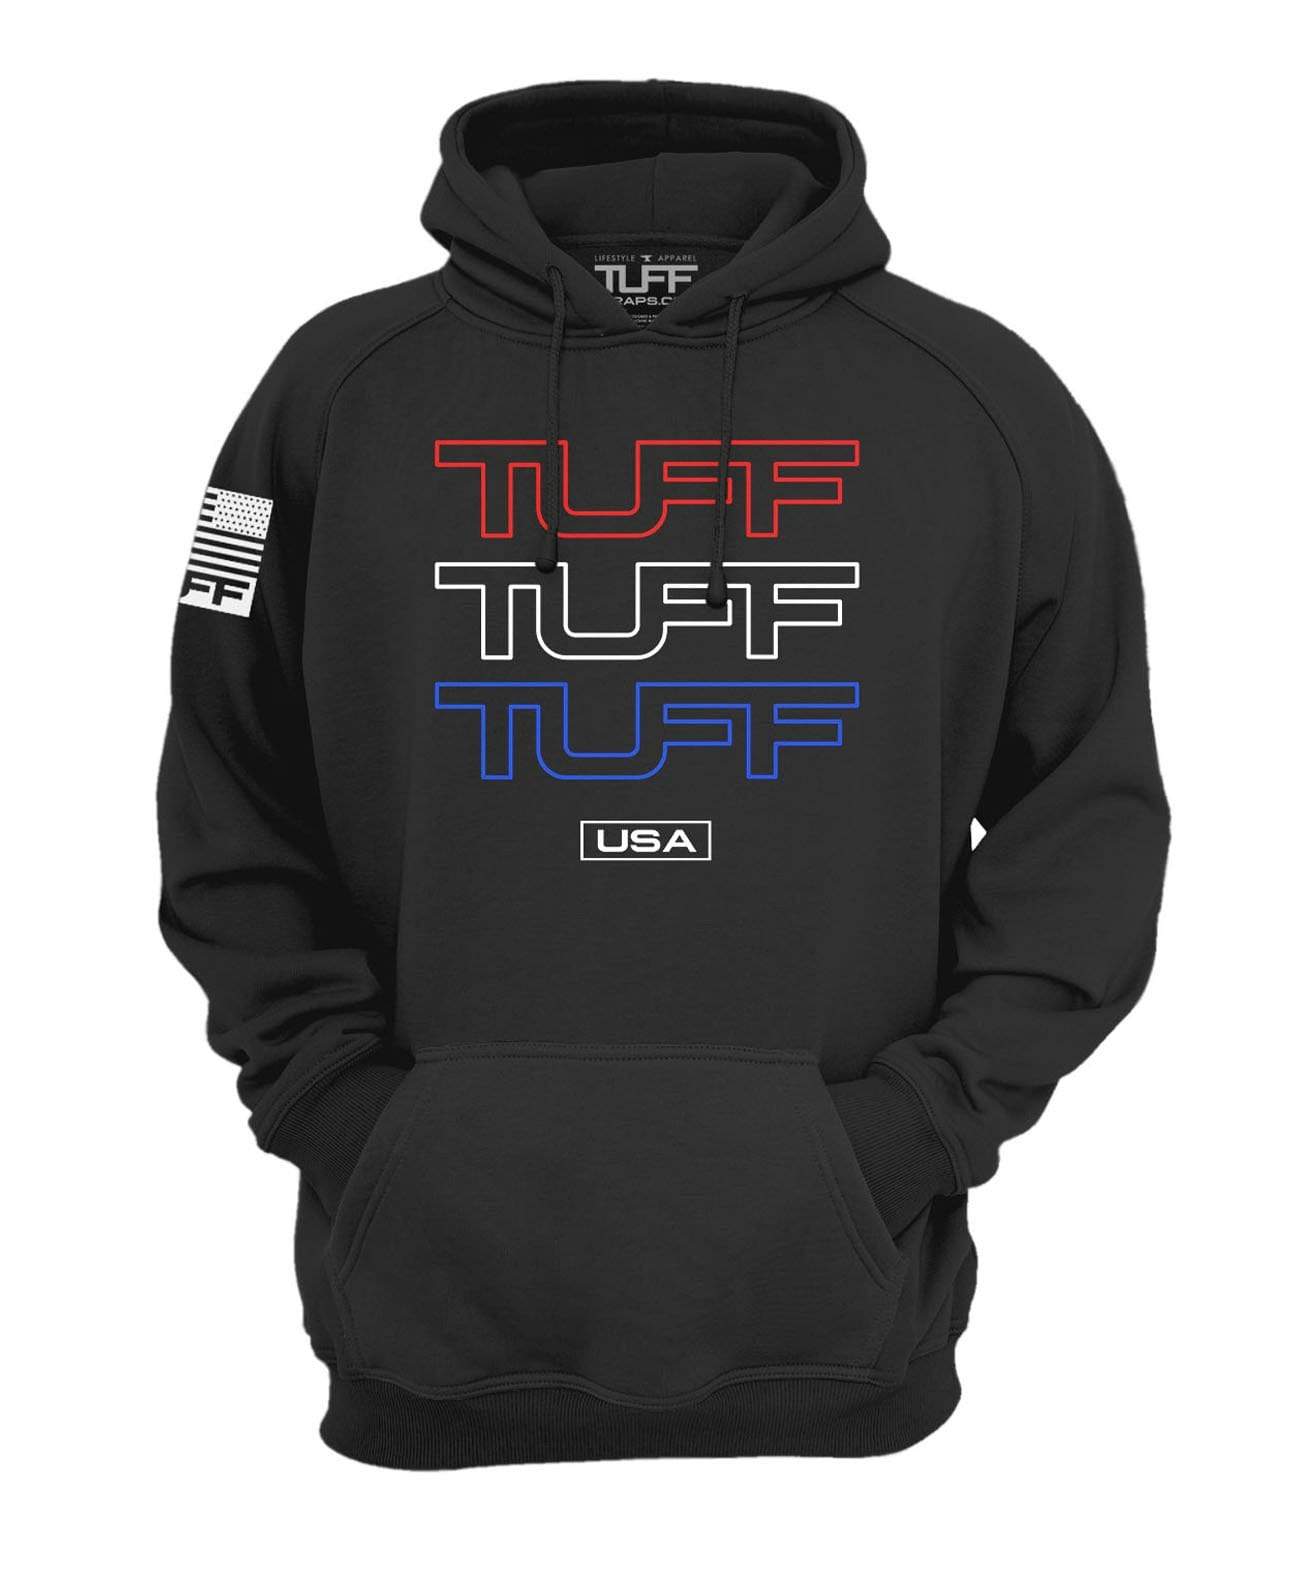 Triple TUFF USA Hooded Sweatshirt Men's Sweatshirts